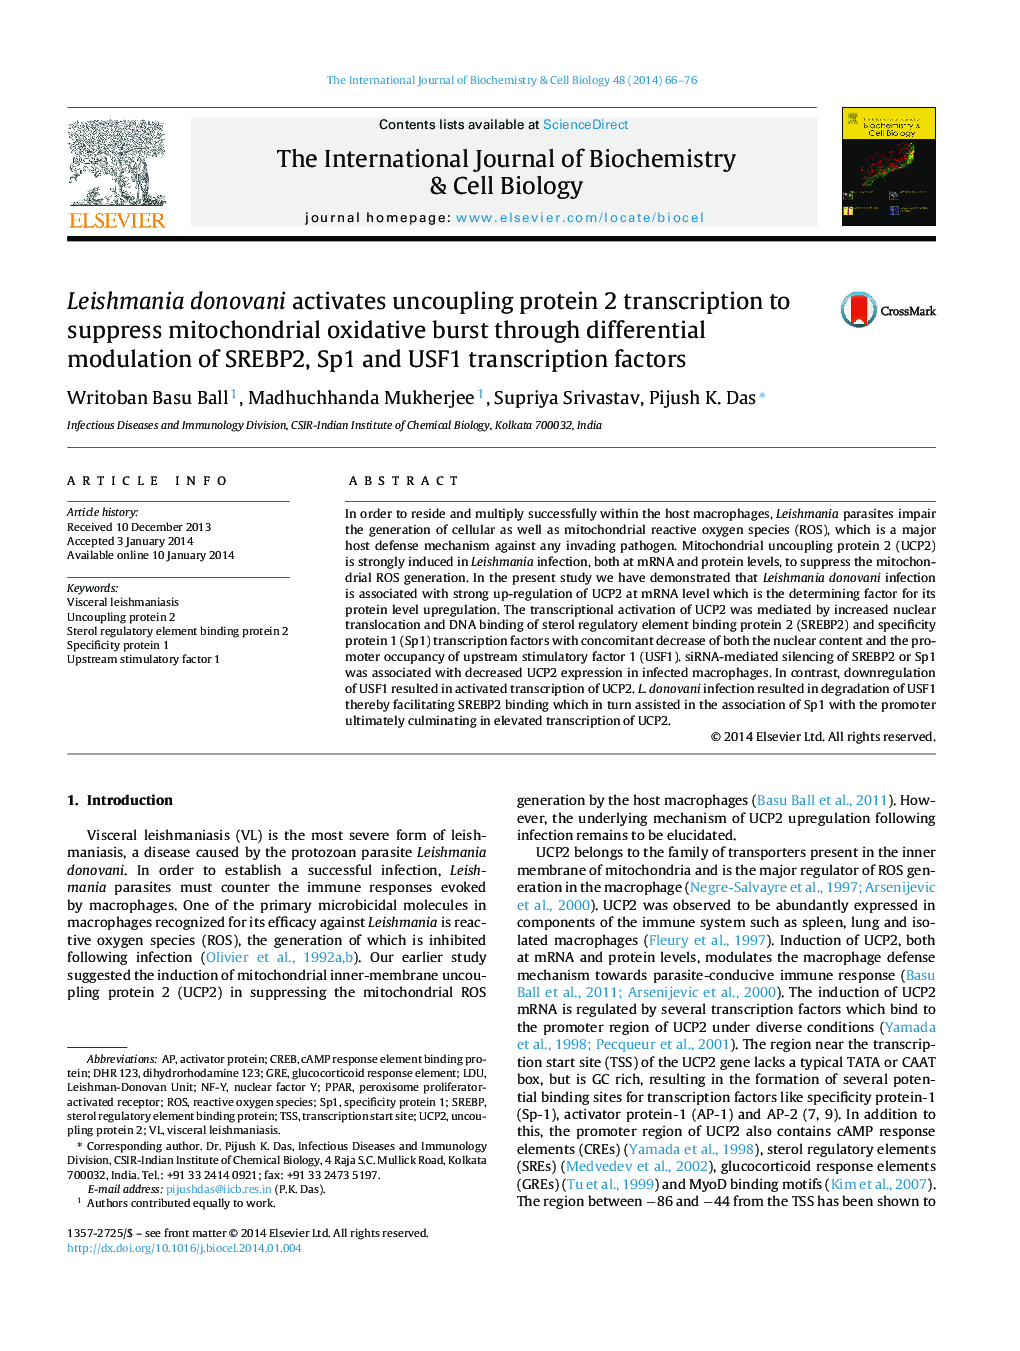 Leishmania donovani activates uncoupling protein 2 transcription to suppress mitochondrial oxidative burst through differential modulation of SREBP2, Sp1 and USF1 transcription factors